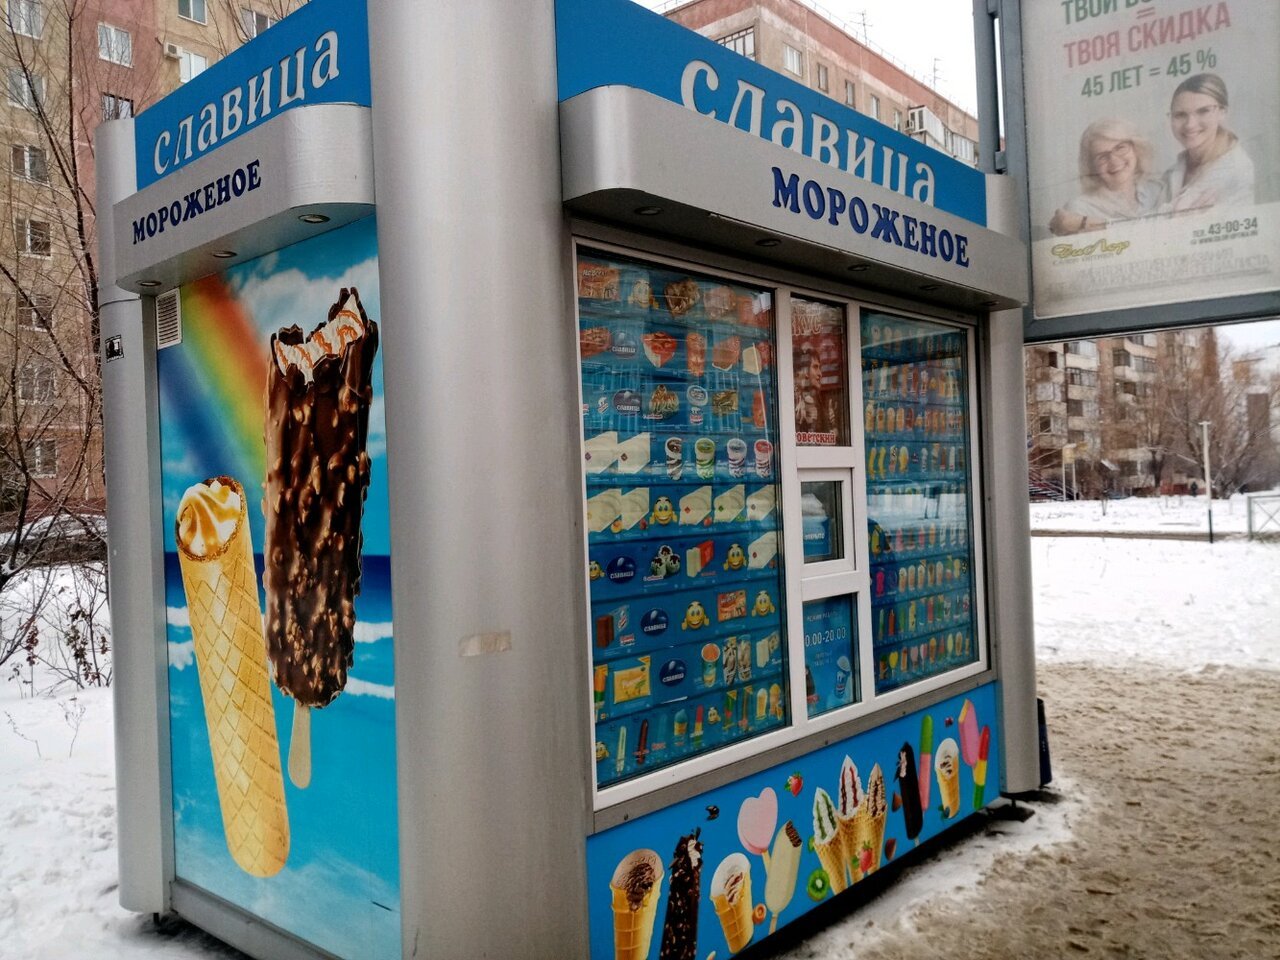 Славица мороженое Оренбург